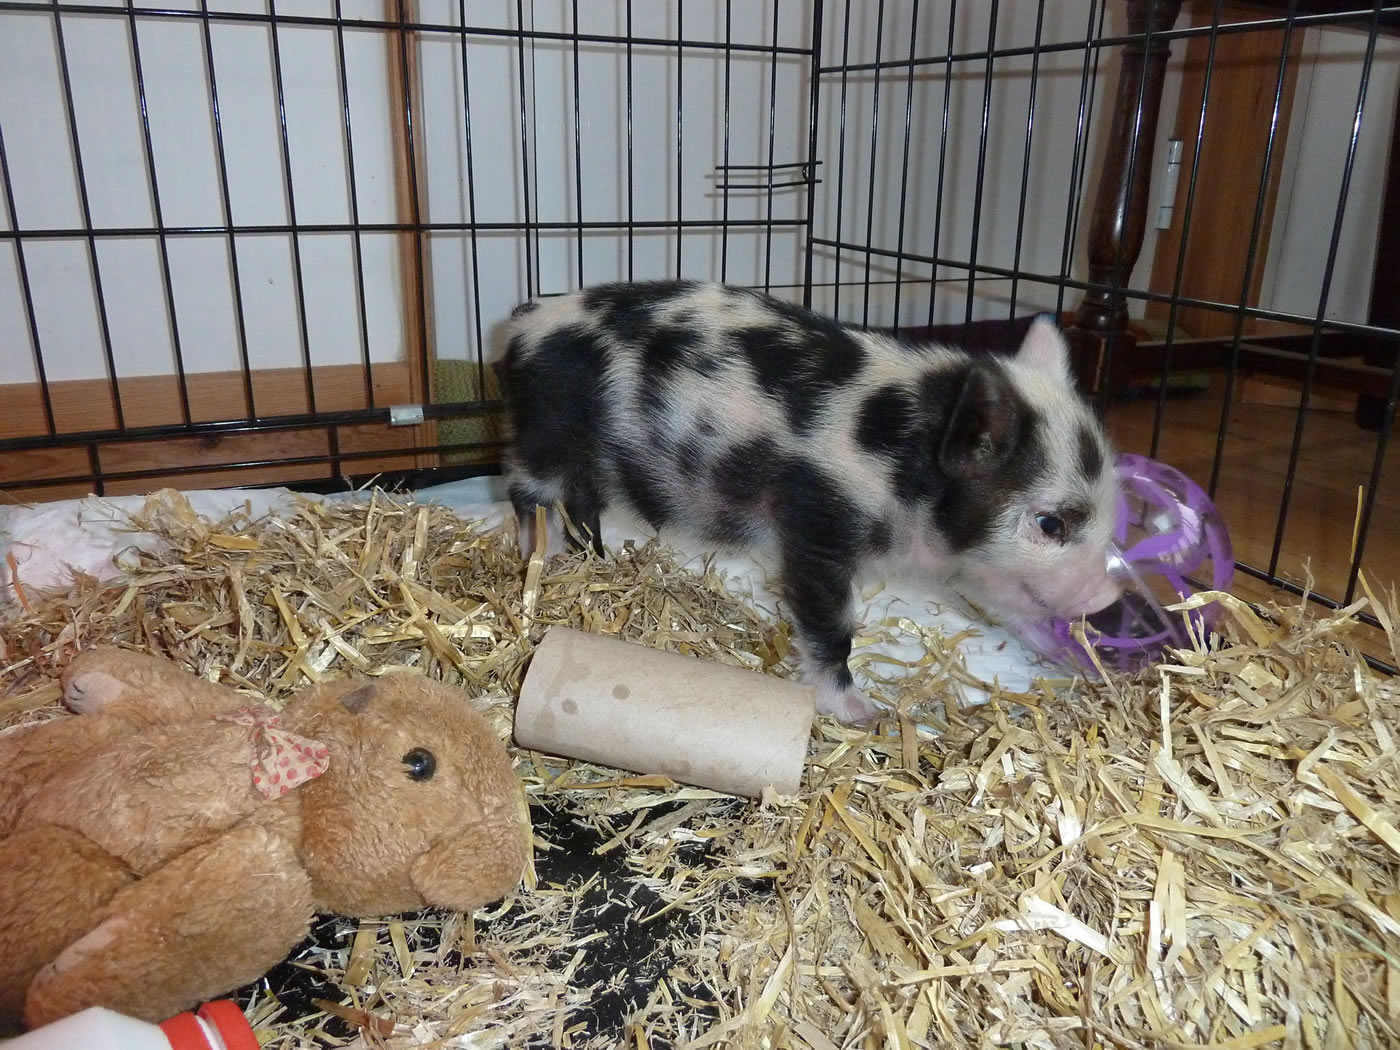 Picture of 11 day old Pet Kunekune pig.